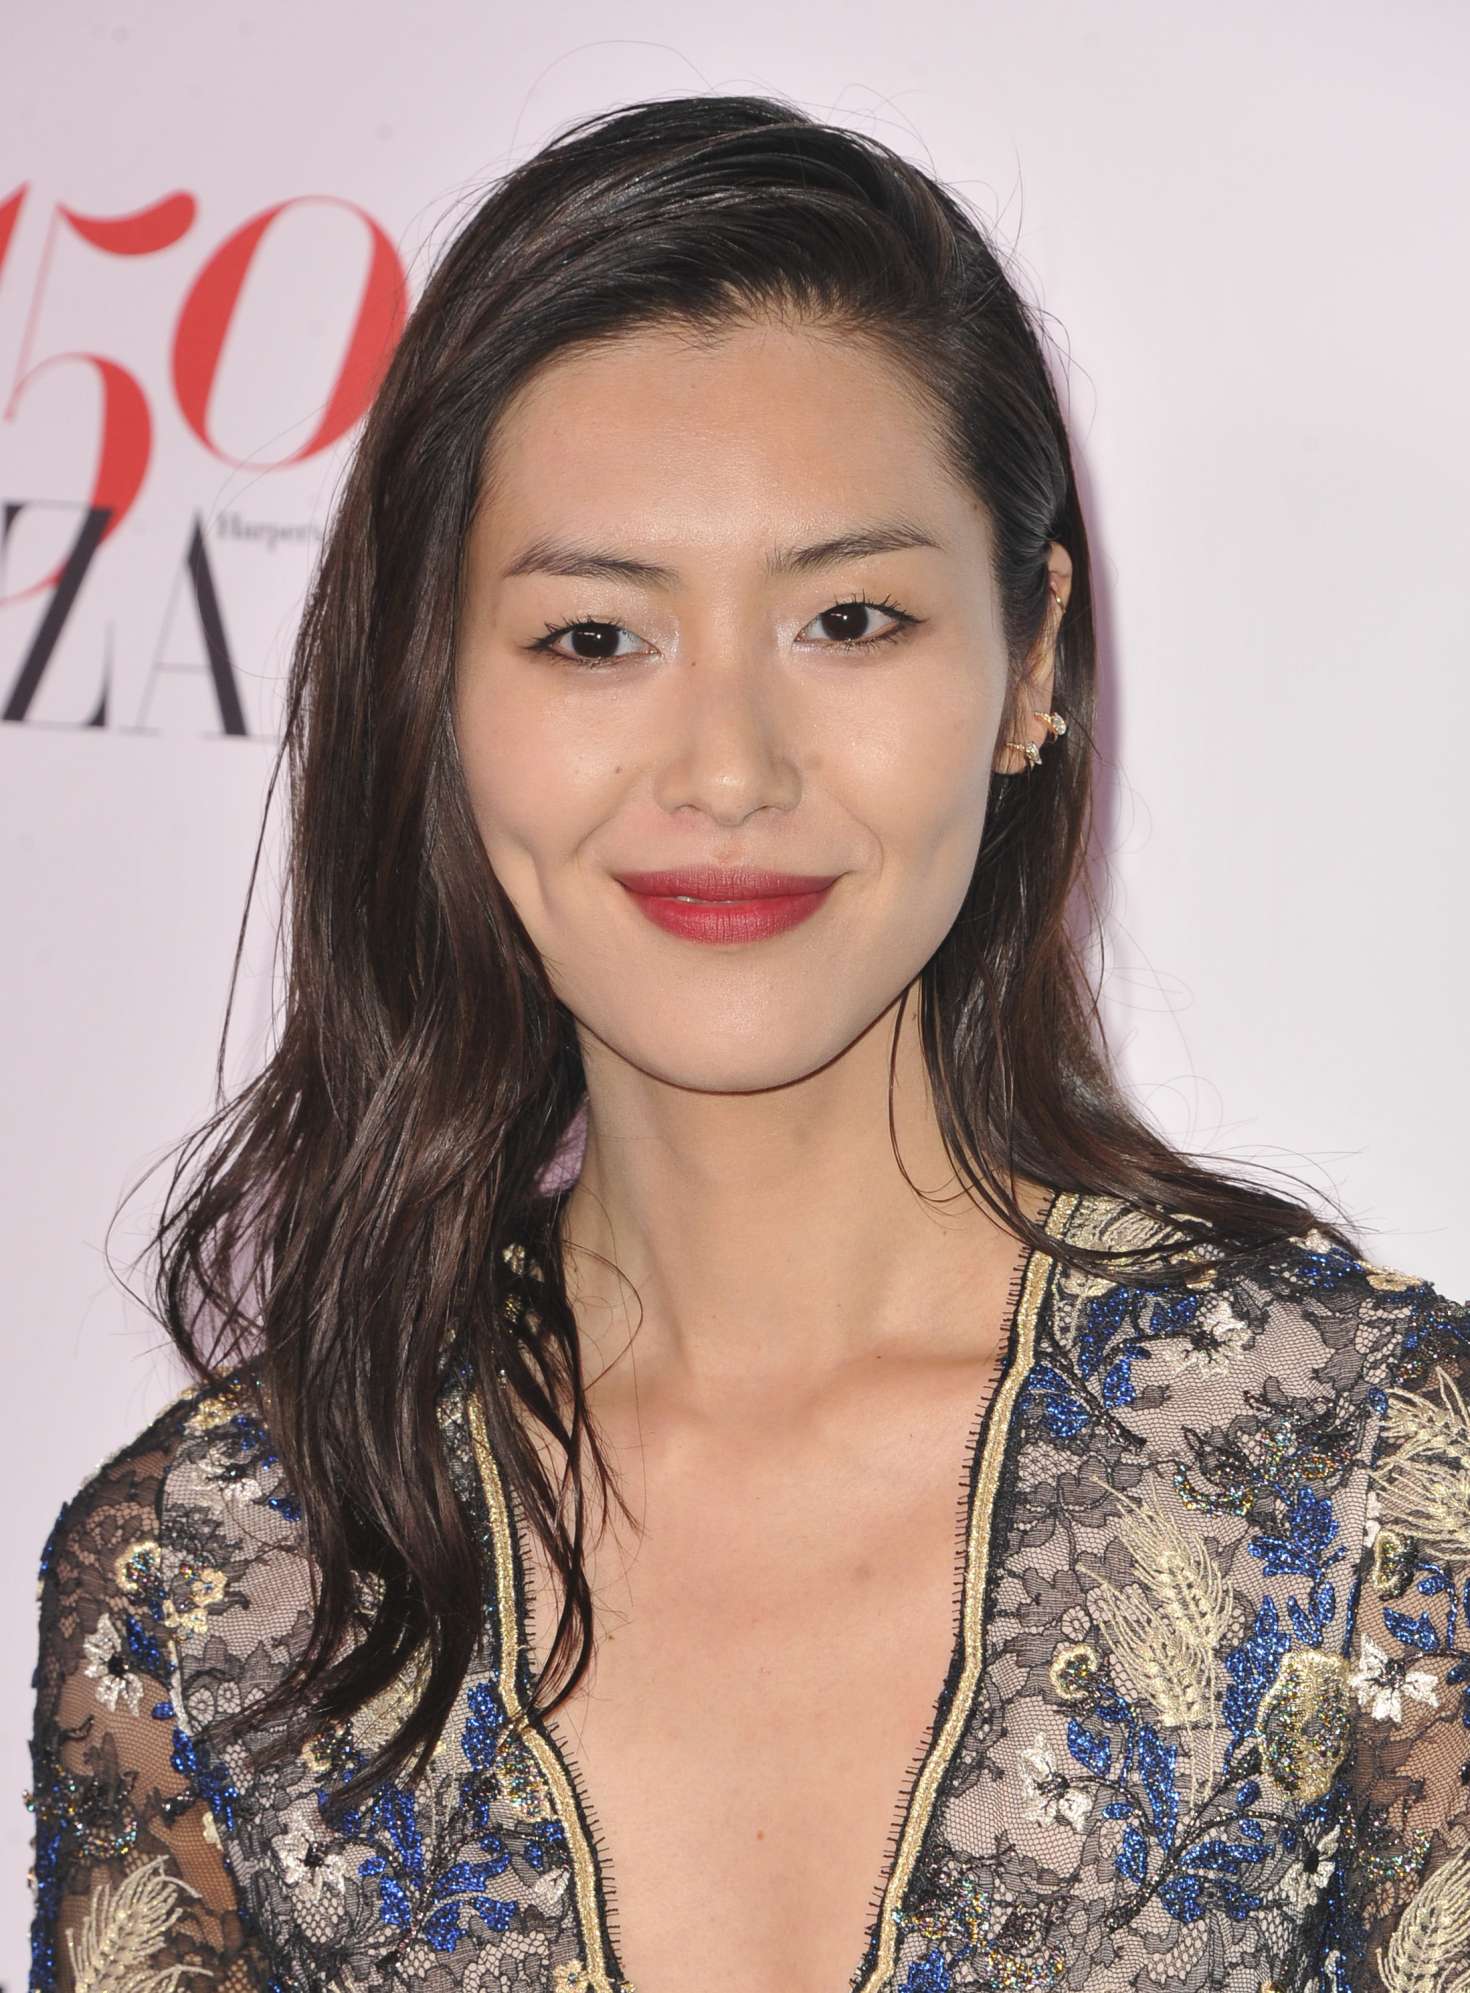 Liu Wen: Harpers Bazaar Celebrates 150 Most Fashionable Women -02 ...